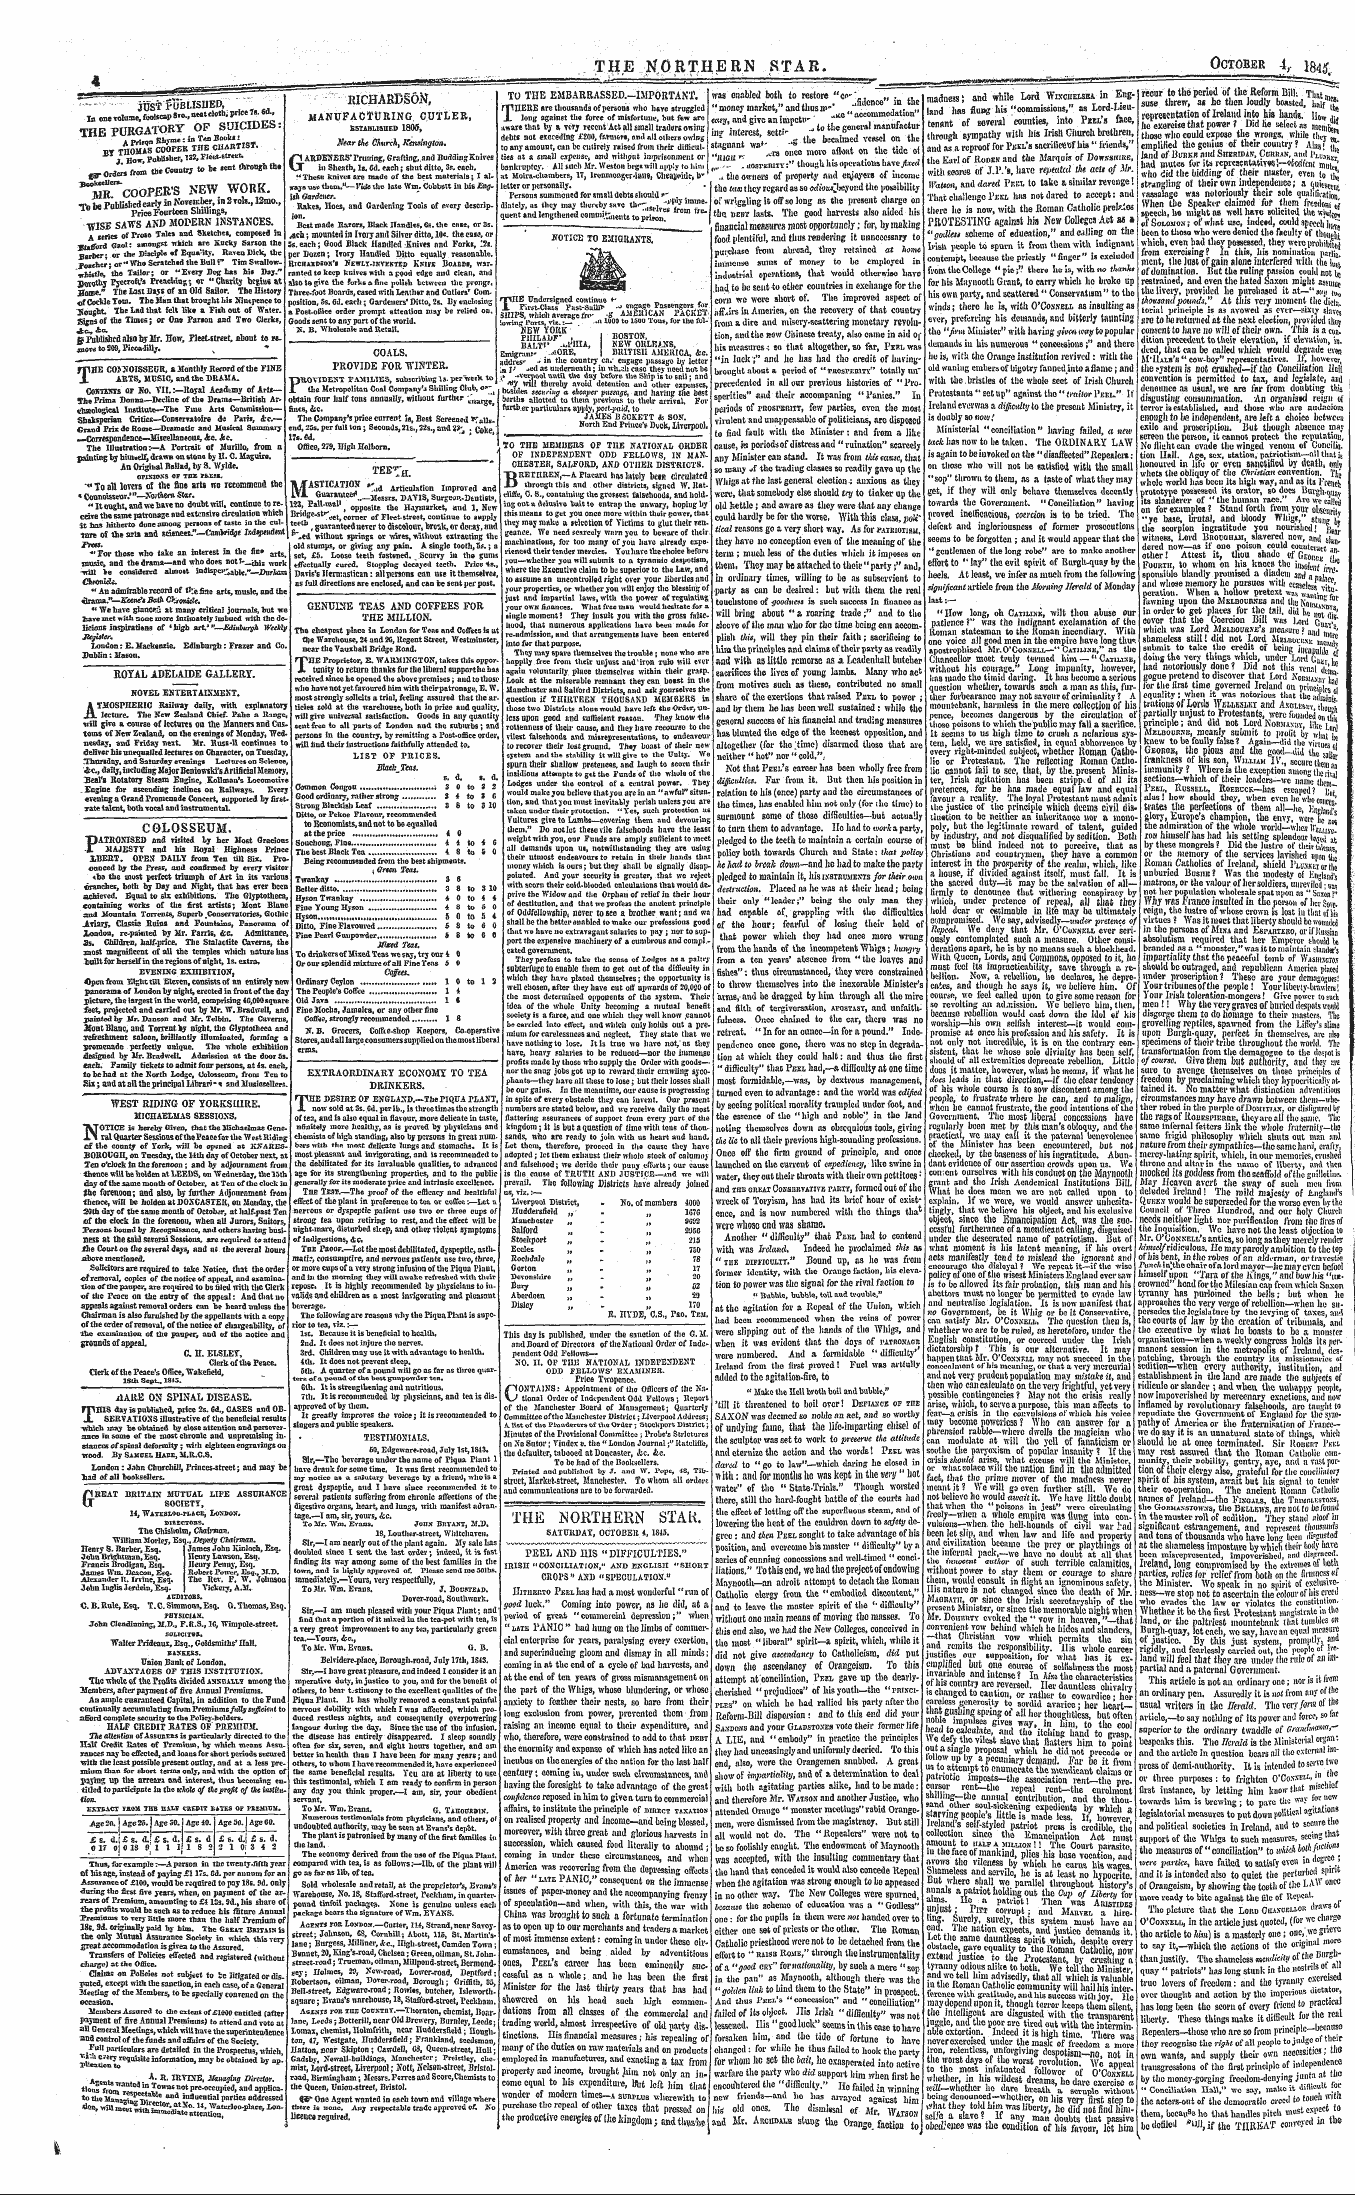 Northern Star (1837-1852): jS F Y, 4th edition - Ad00419